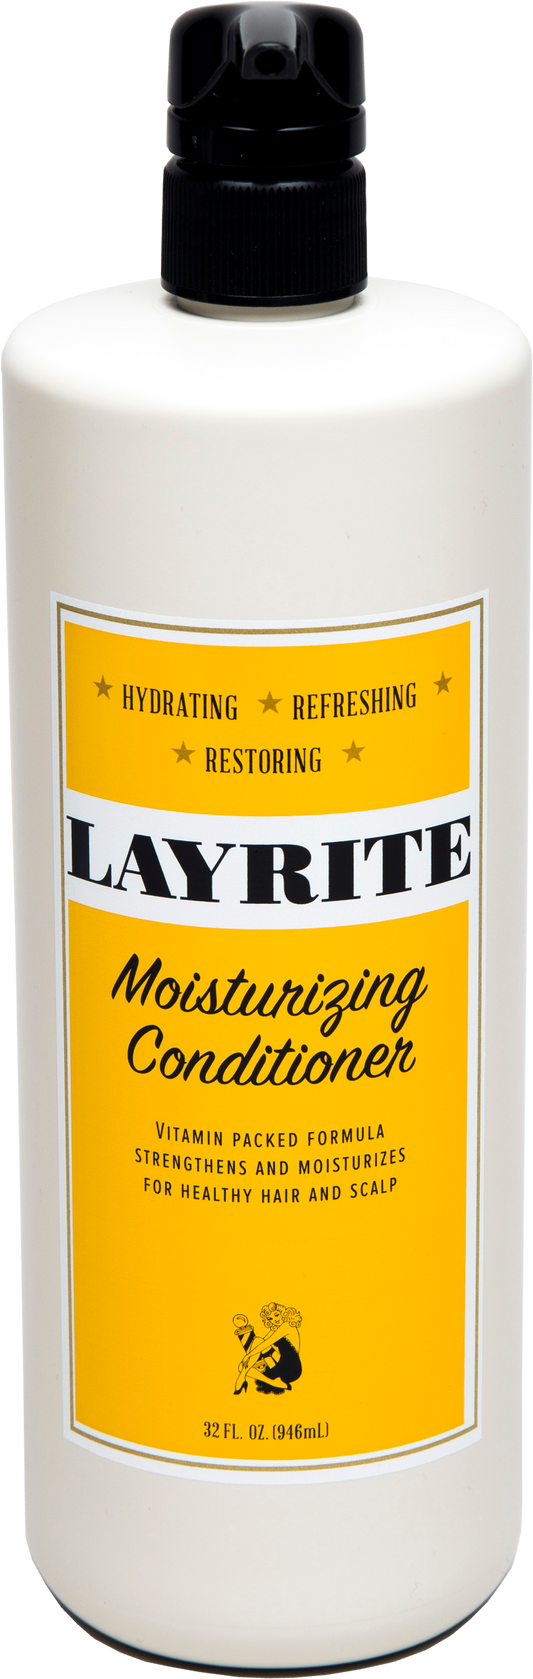 Layrite Moisturizing Conditioner - 32oz